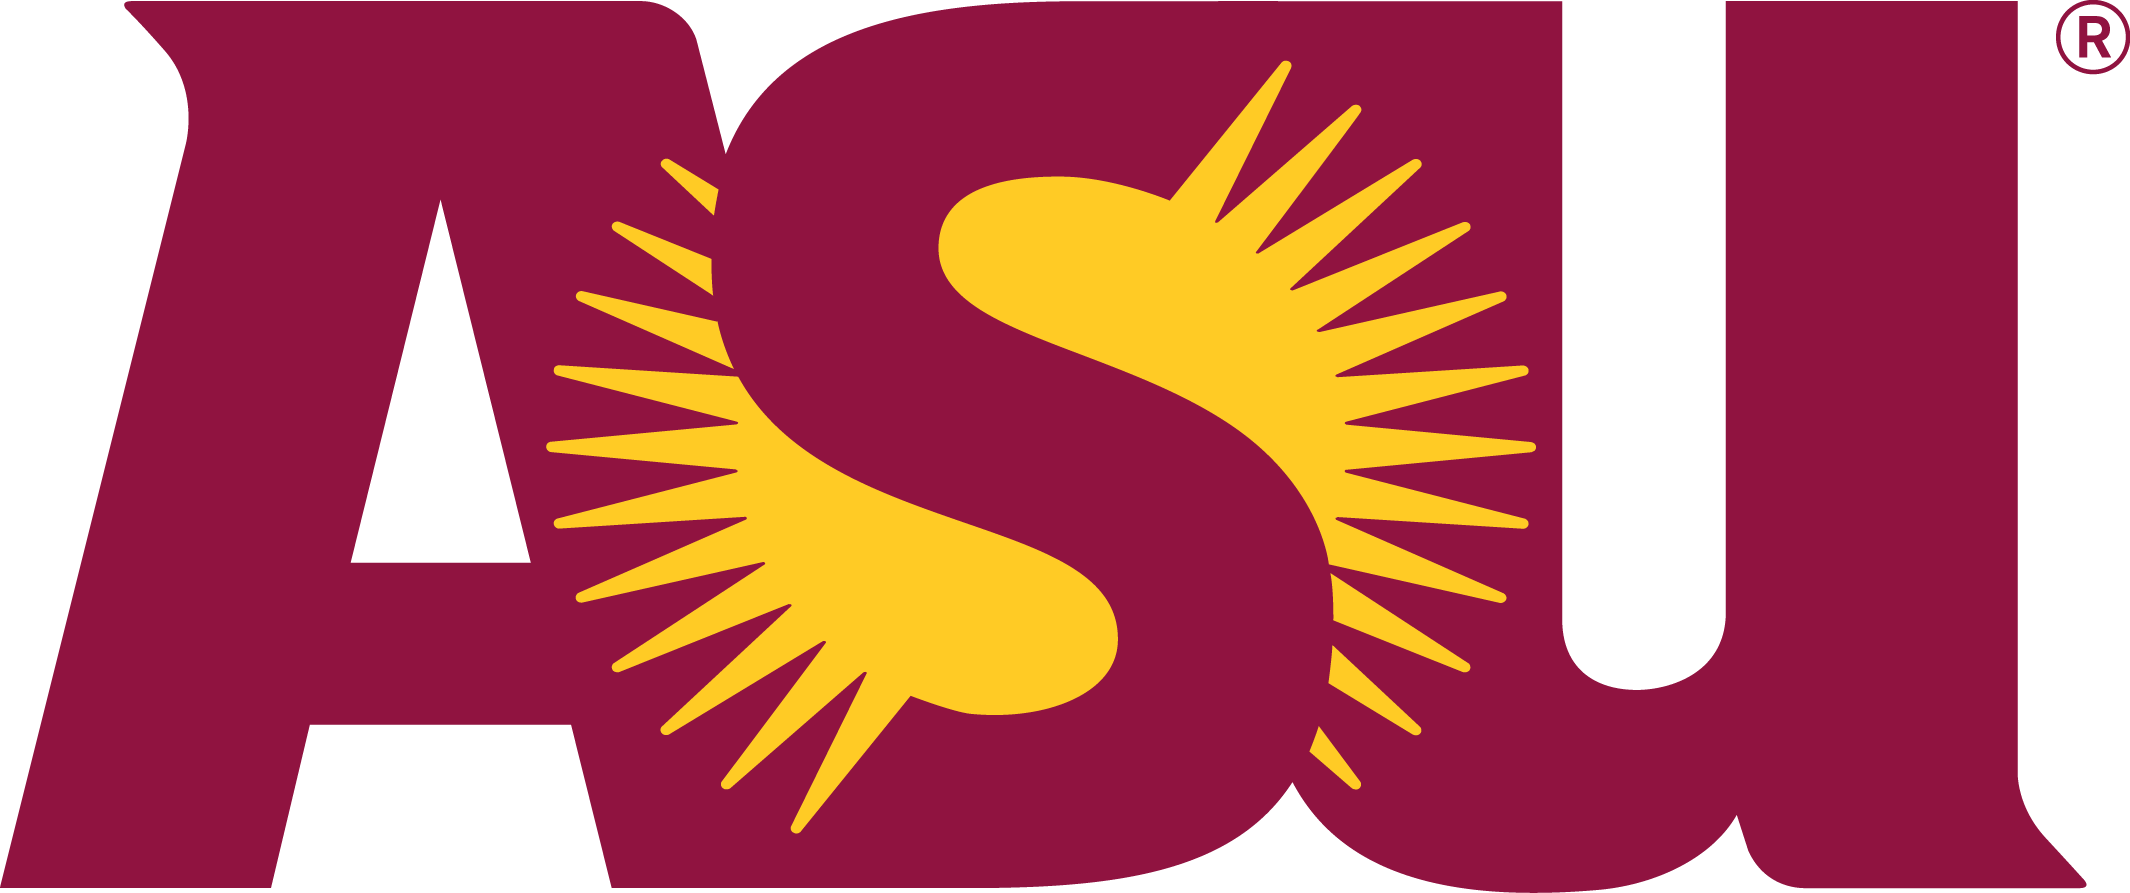 ASU Logo - Arizona State University